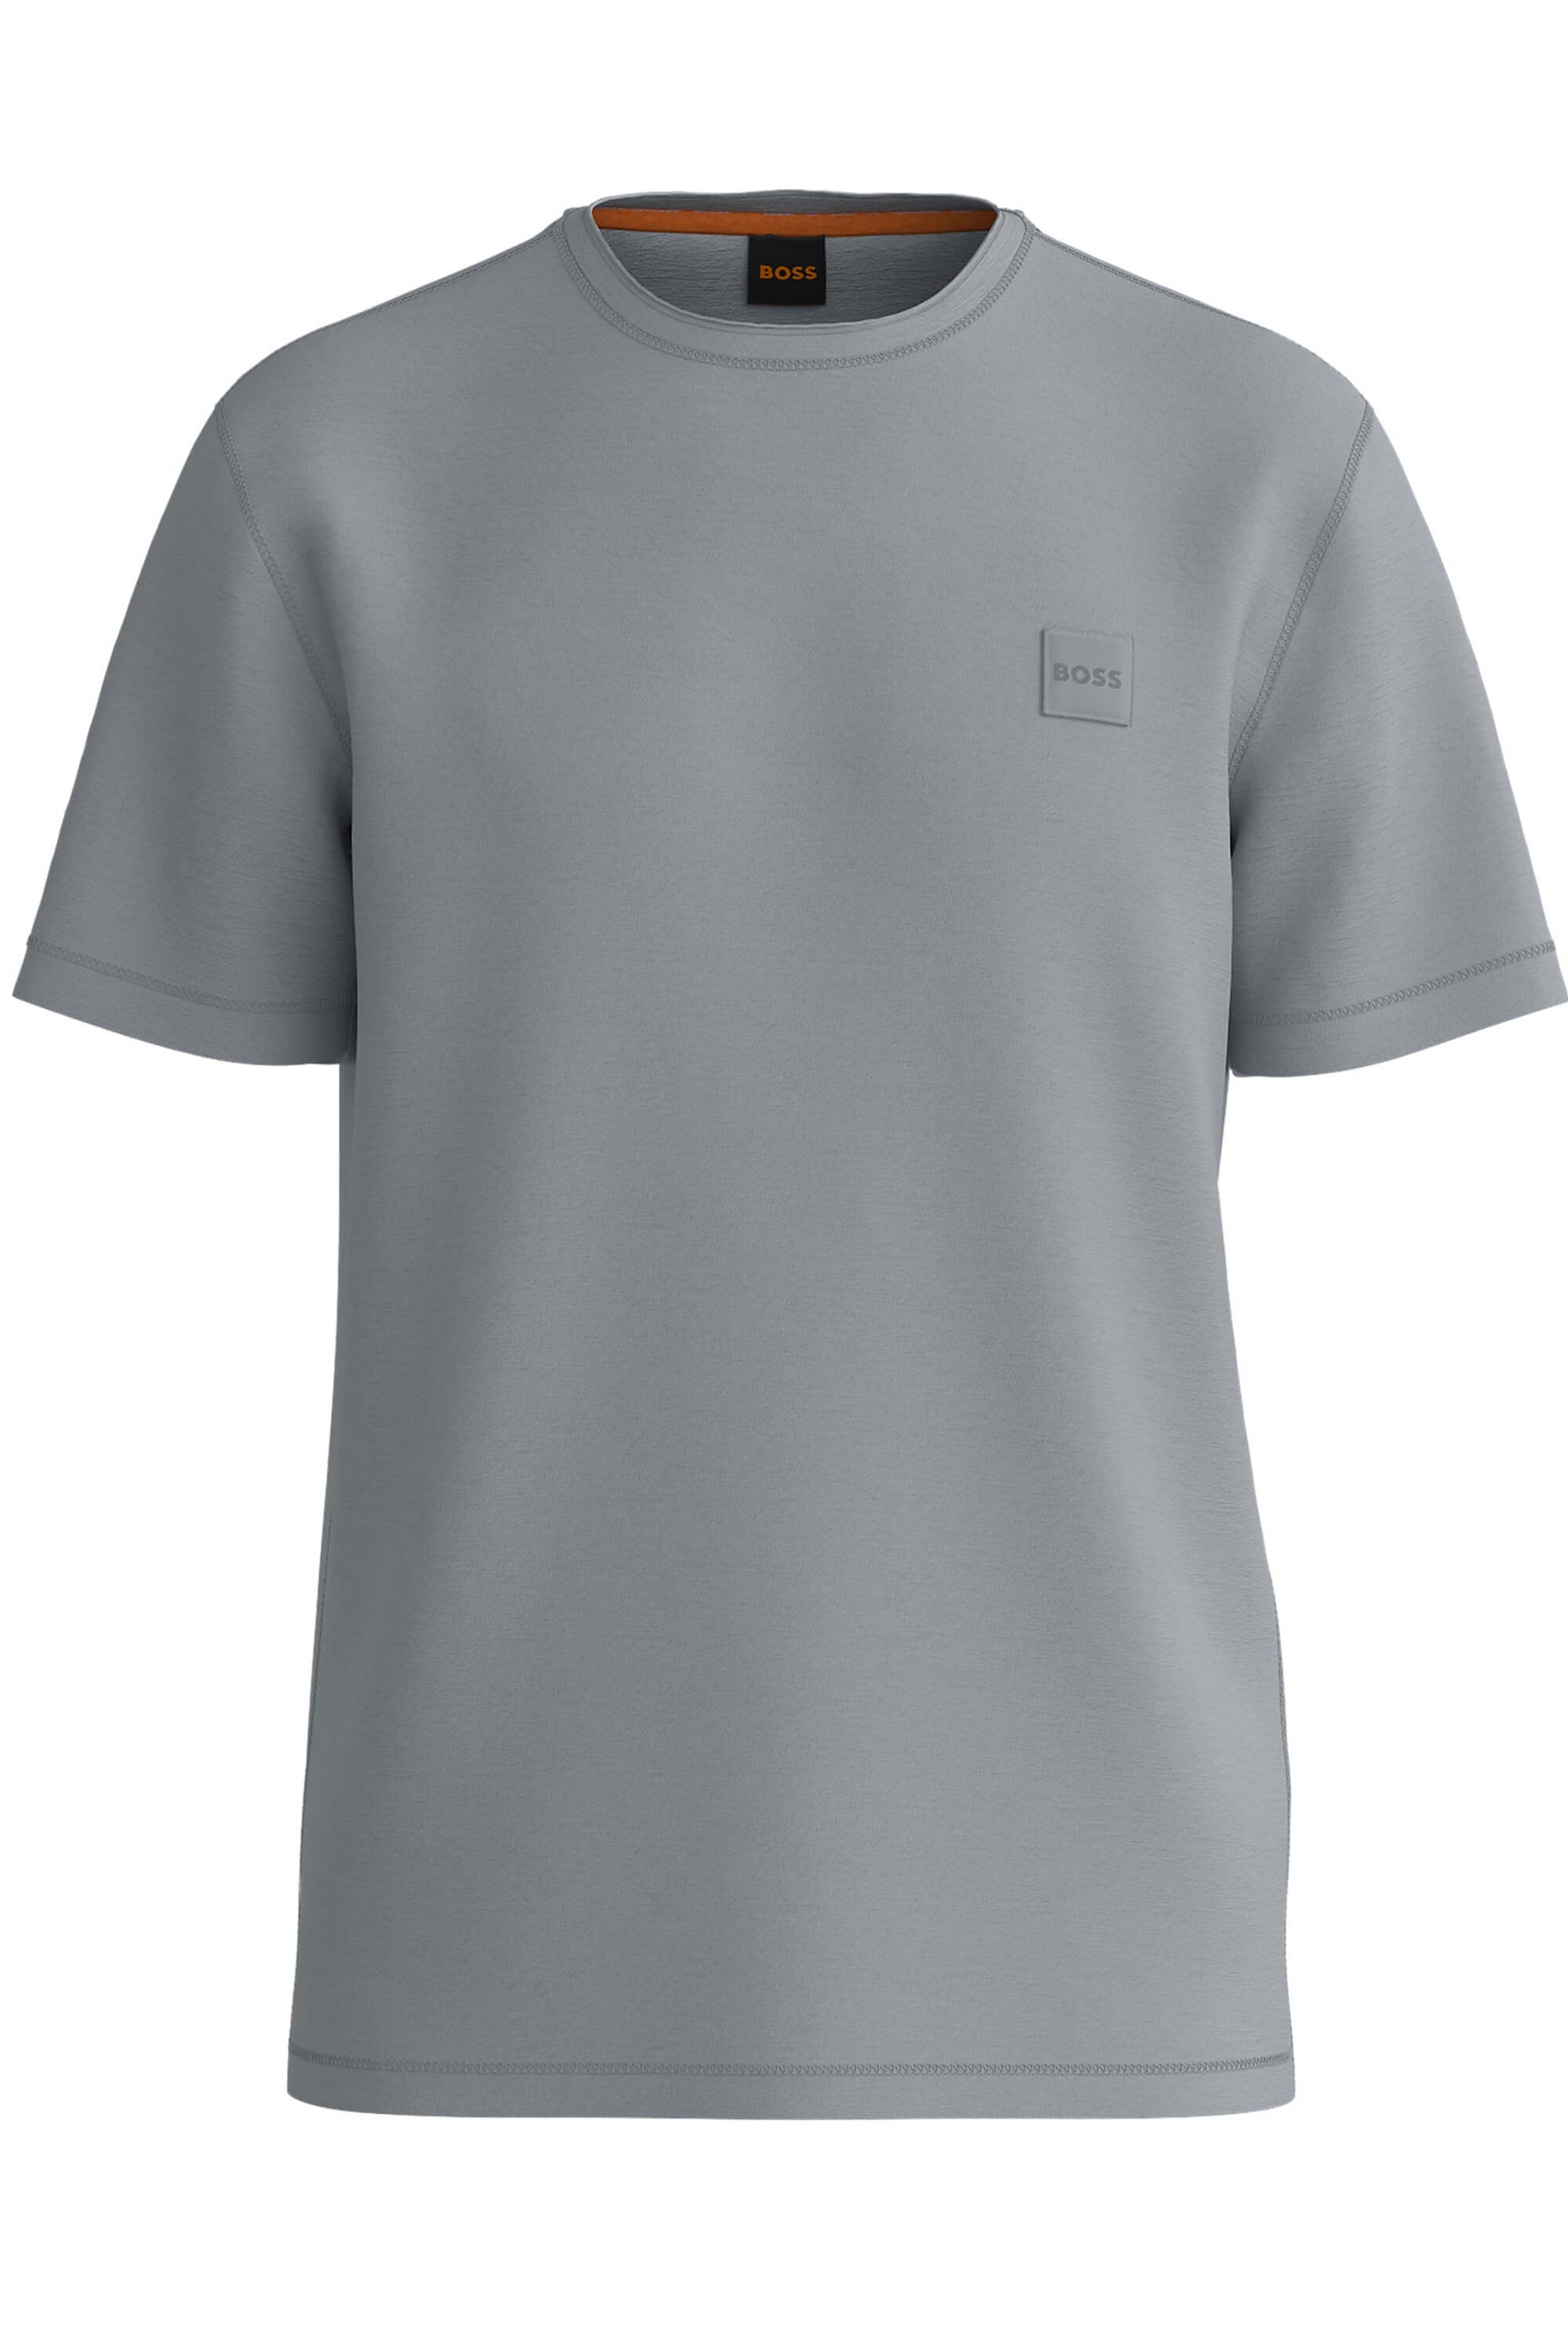 Hugo Boss Tegood T-Shirt Grey